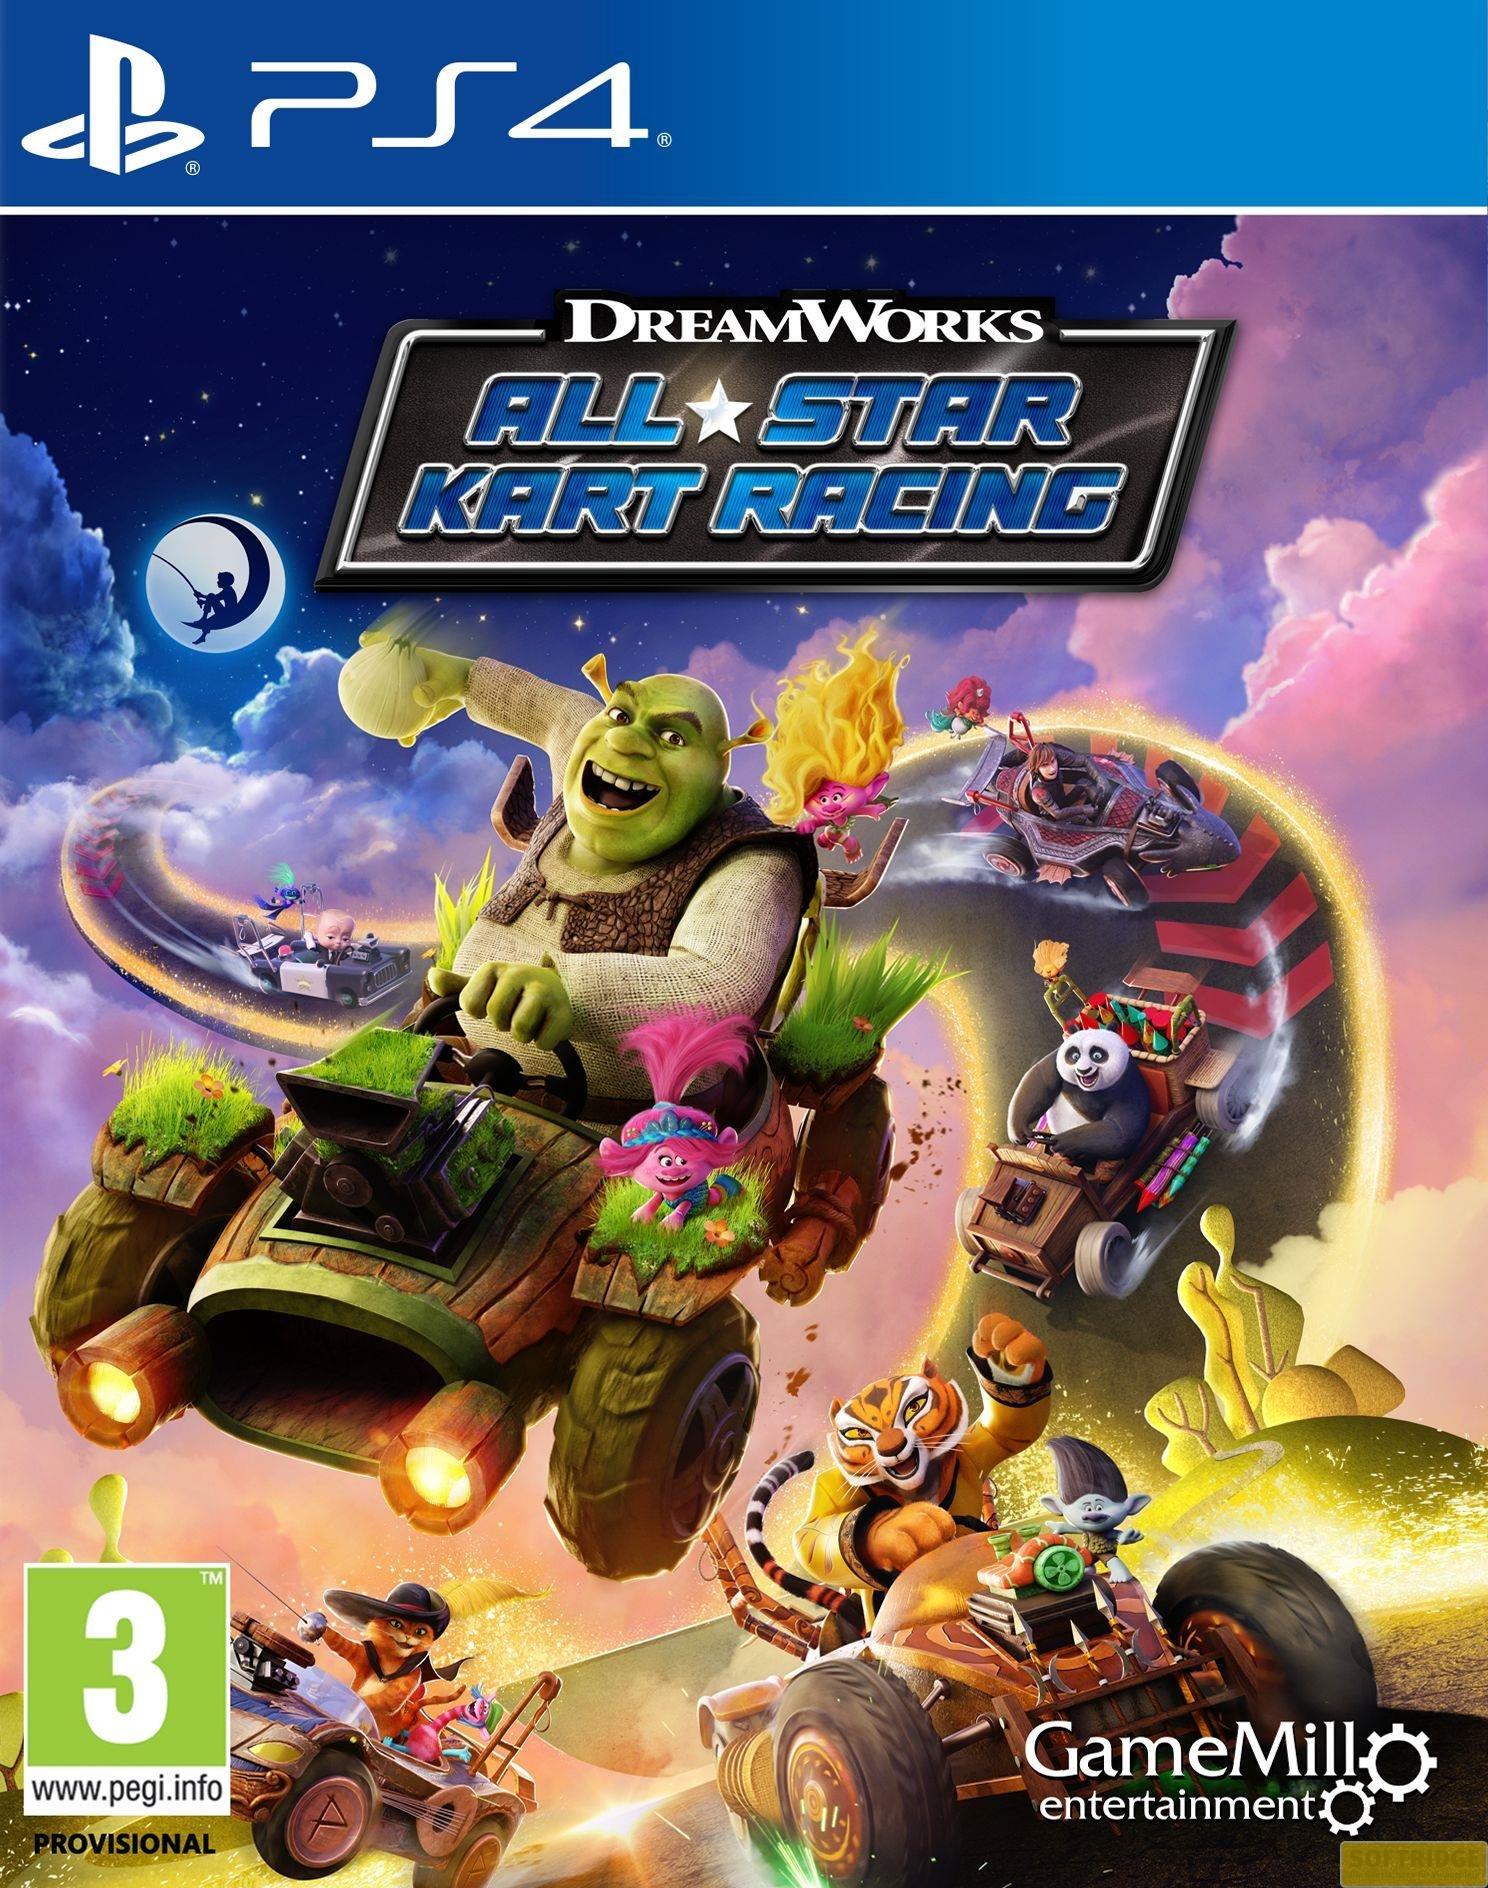 GameMill Entertainment  Dreamworks All-Star Kart Racing 